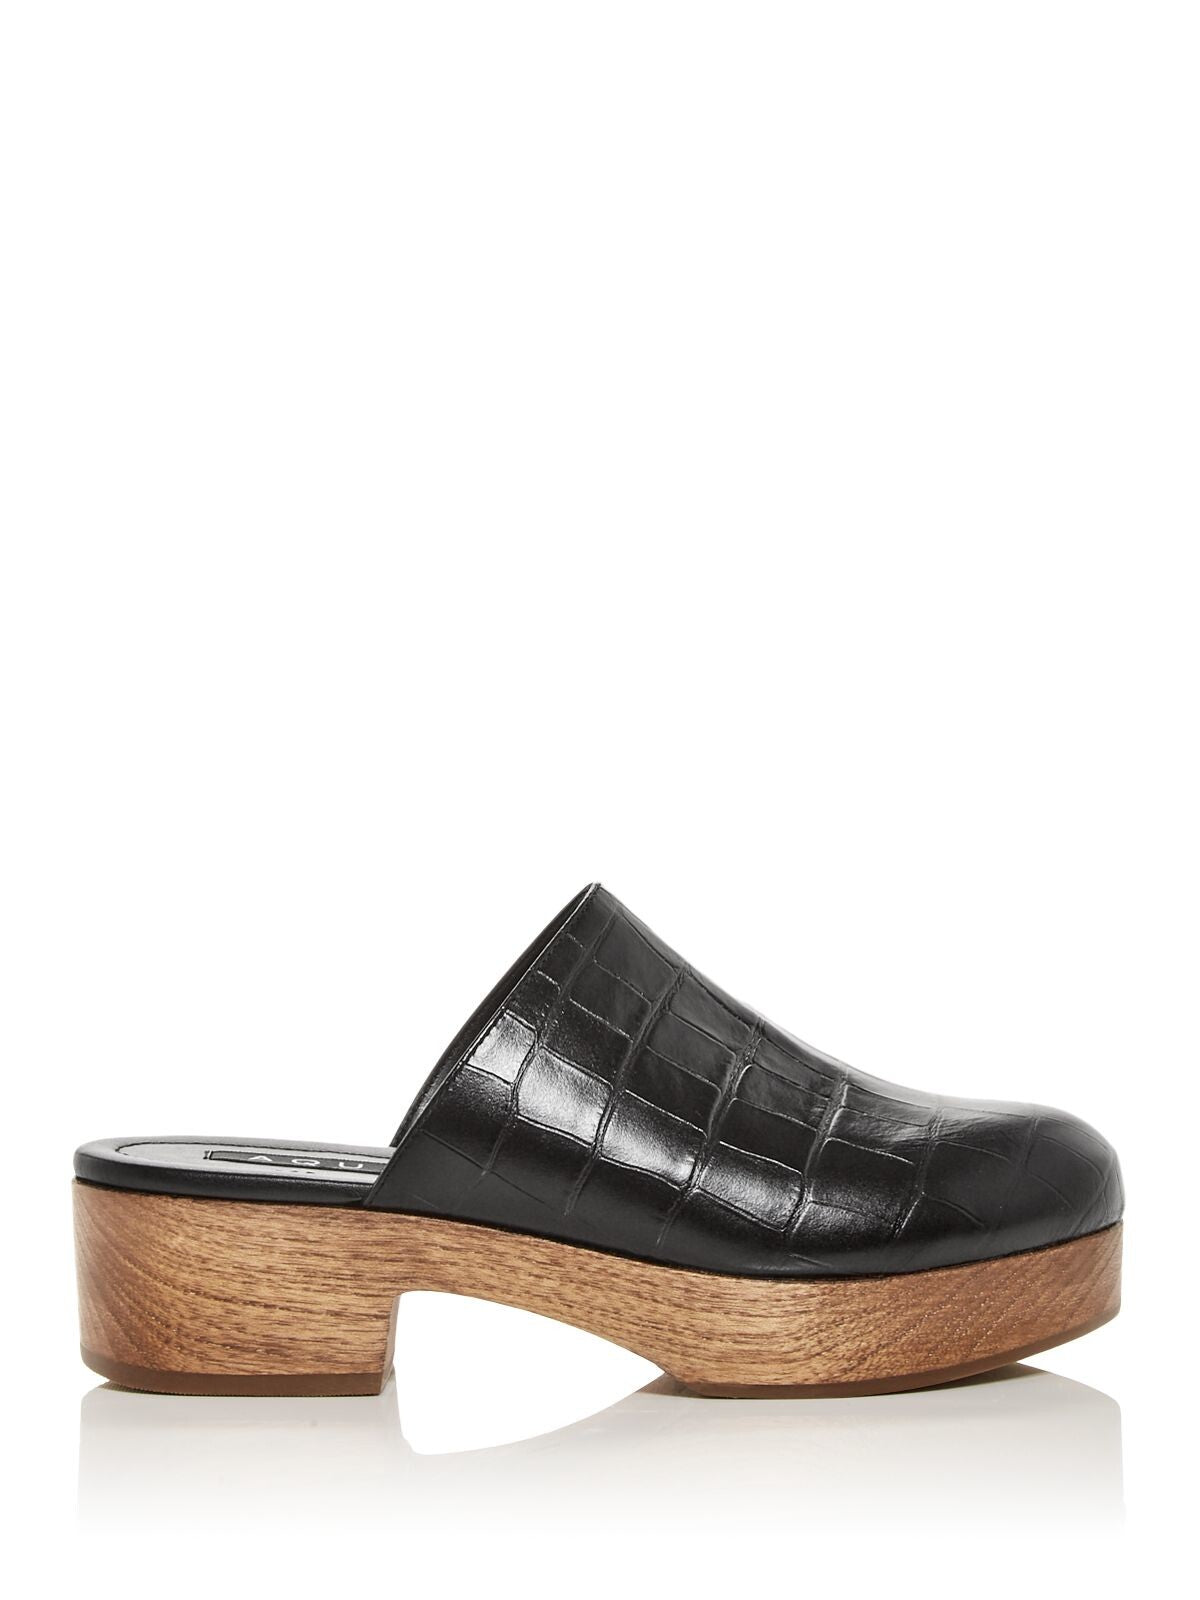 AQUA Womens Black Crocodile Comfort Round Toe Block Heel Slip On Leather Clogs Shoes 6.5